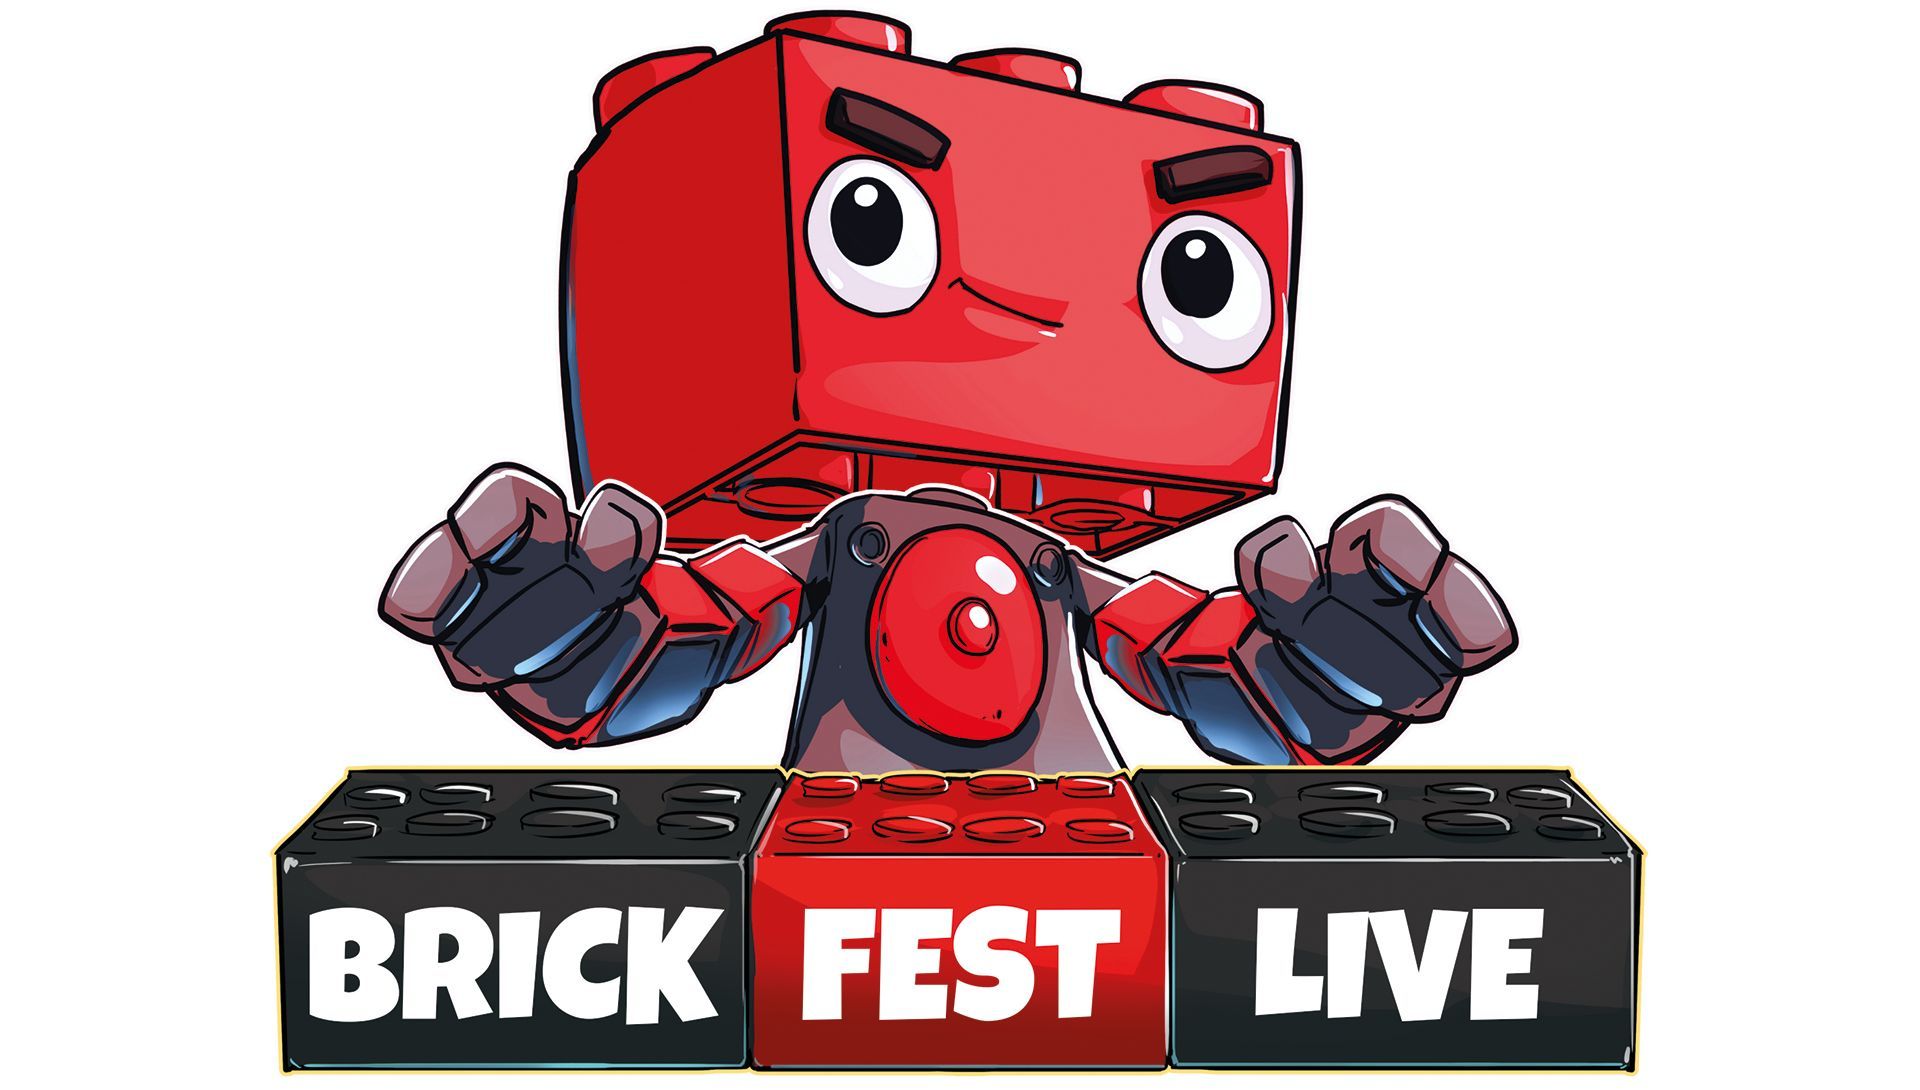 Brickfest Live